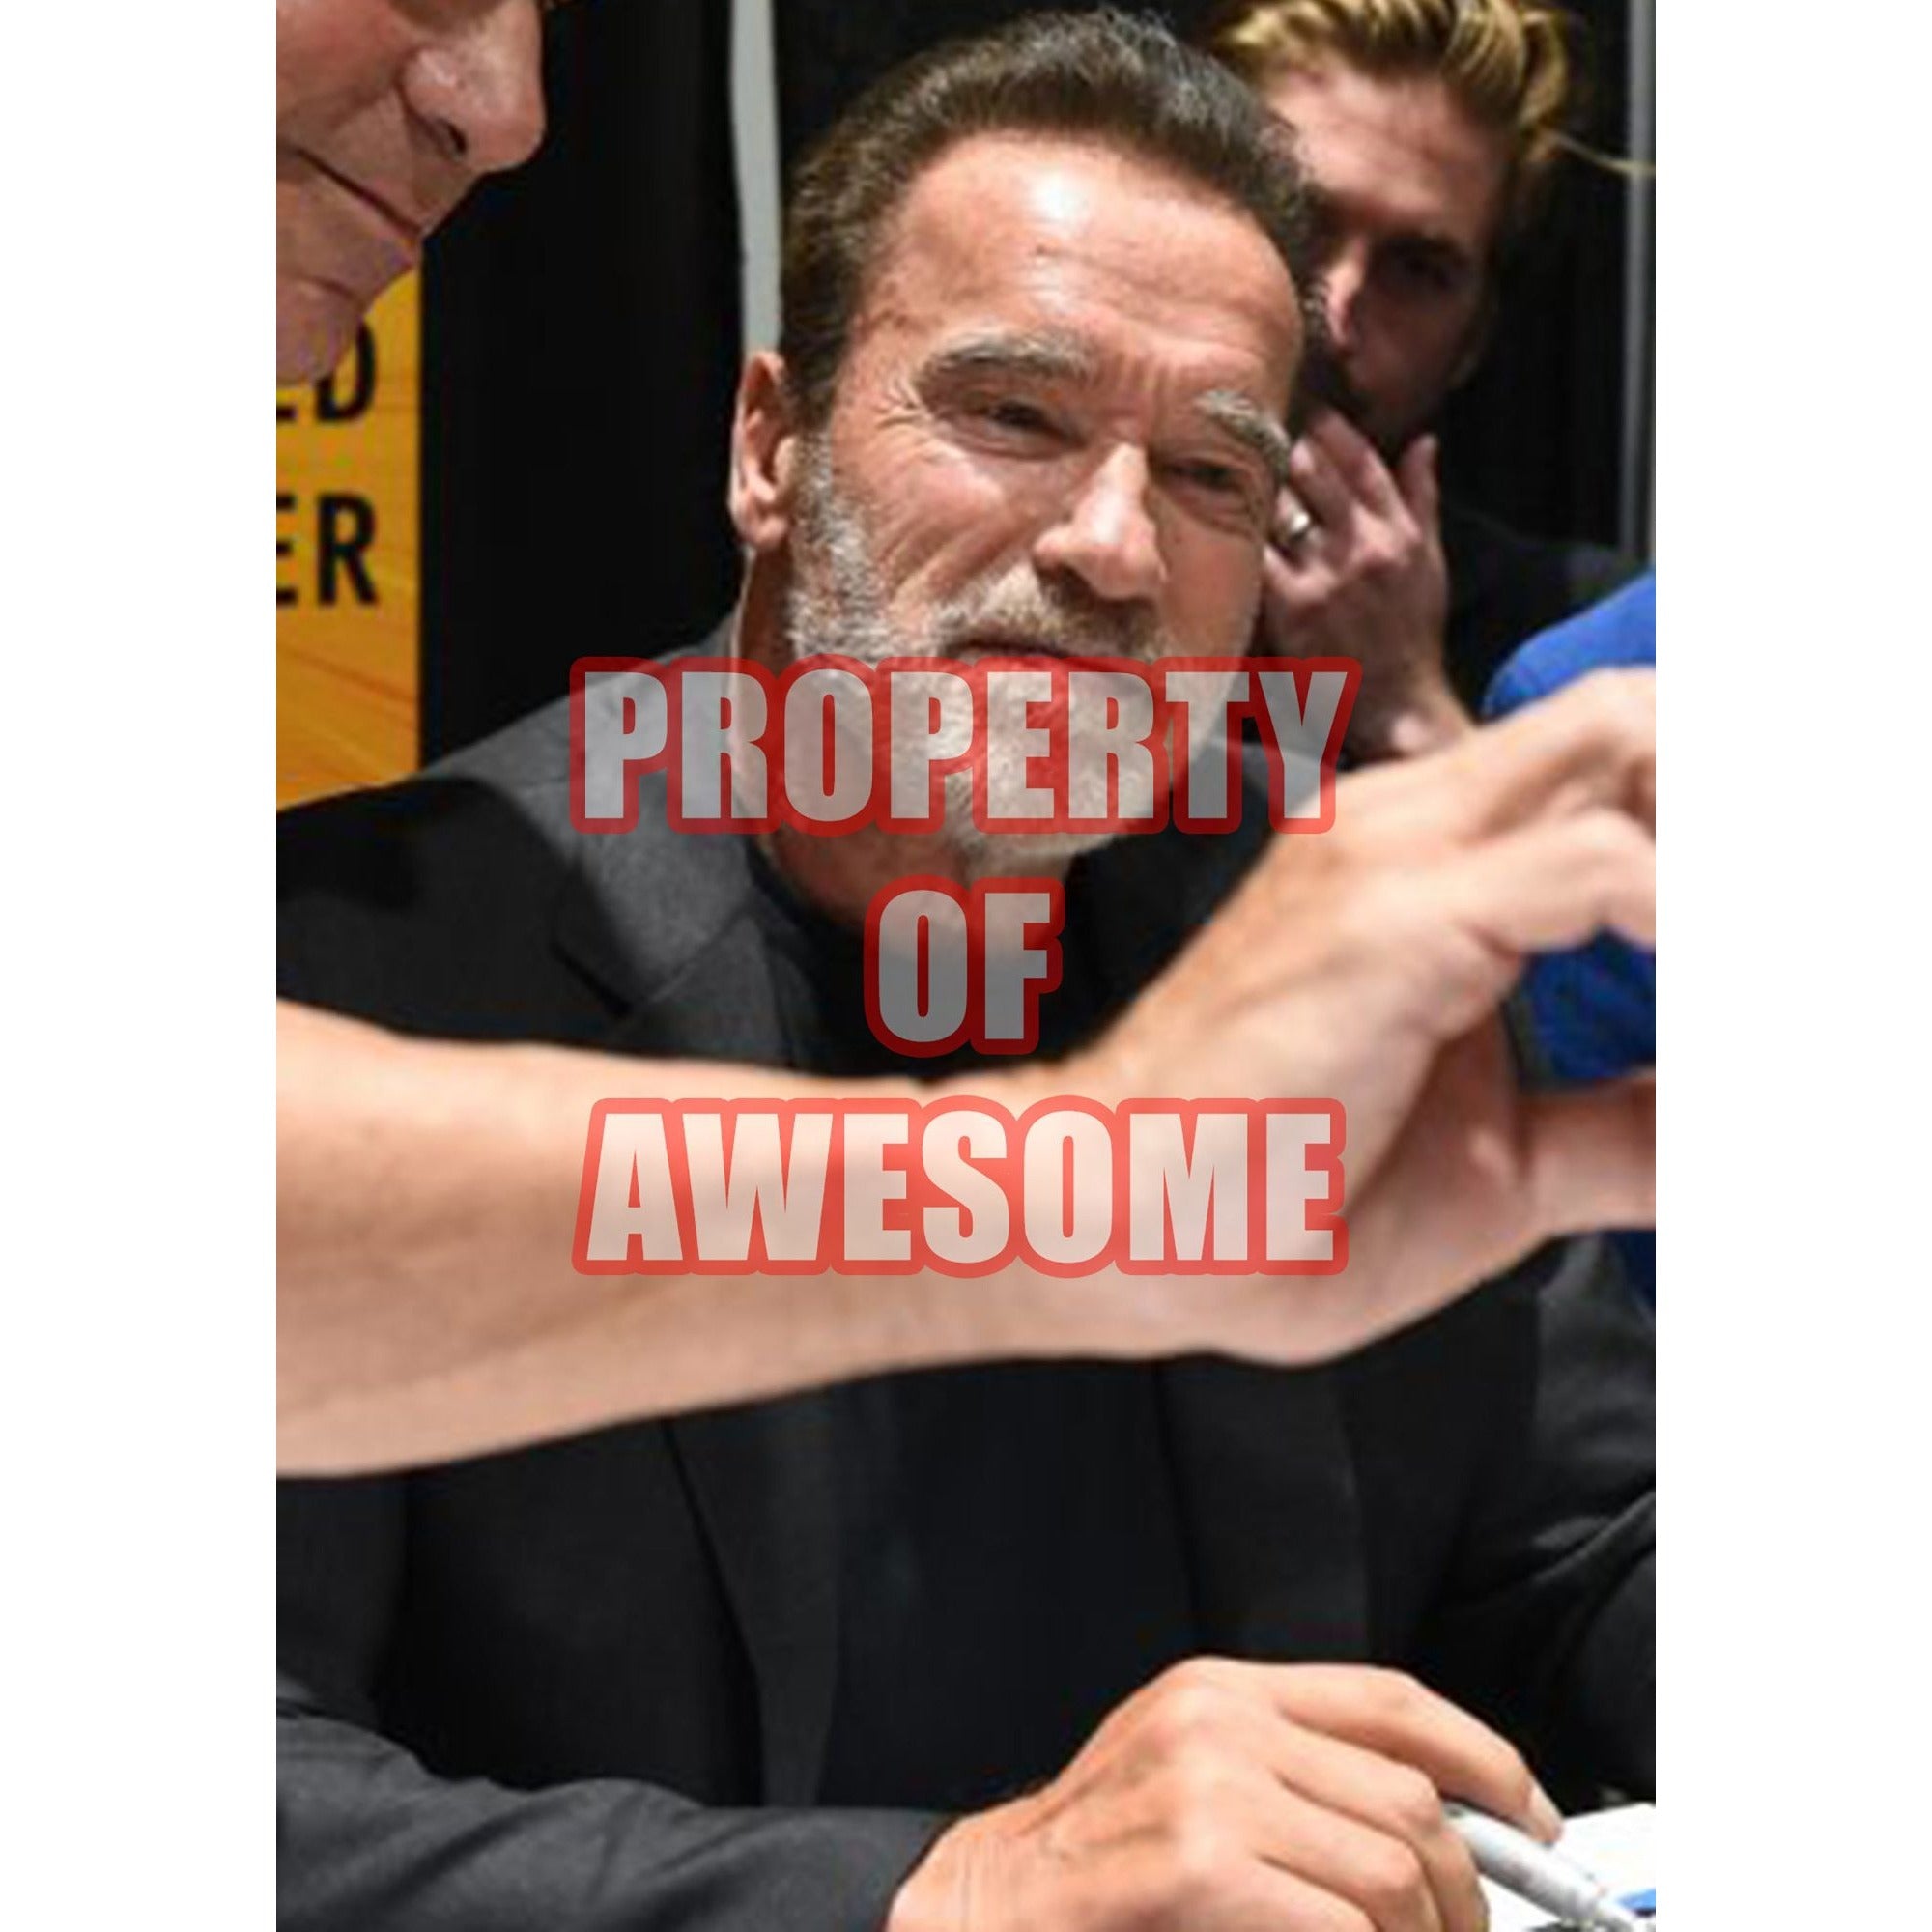 Arnold Schwarzenegger Terminator 8 x 10 signed photo with proof